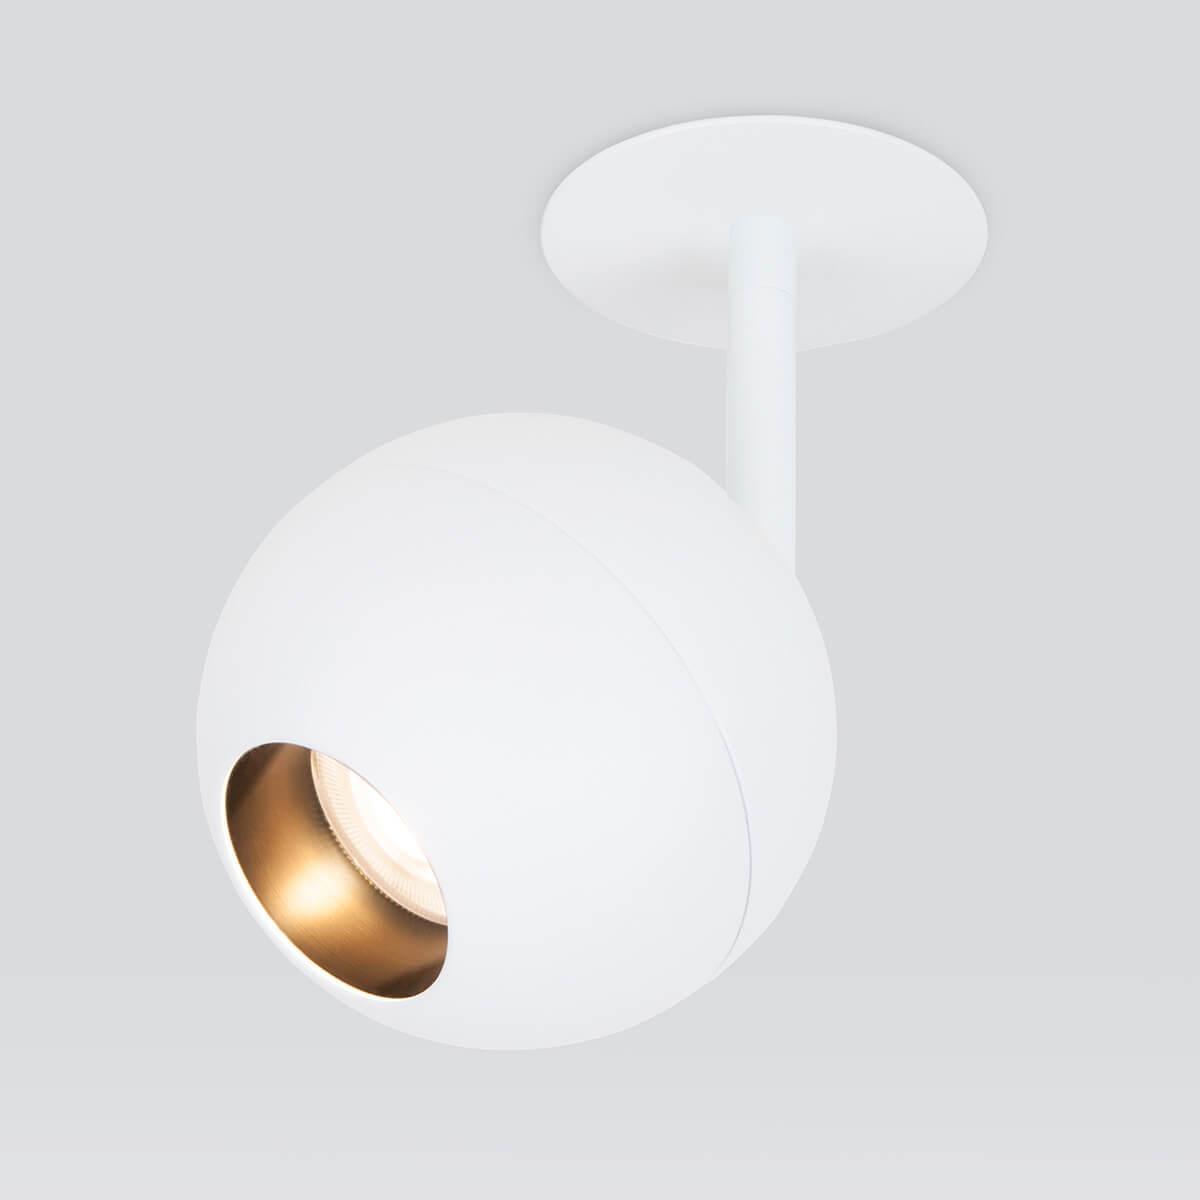 Встраиваемый светодиодный спот Elektrostandard Ball 9926 LED 12W 4200K белый 4690389169830 luxe ball ваза